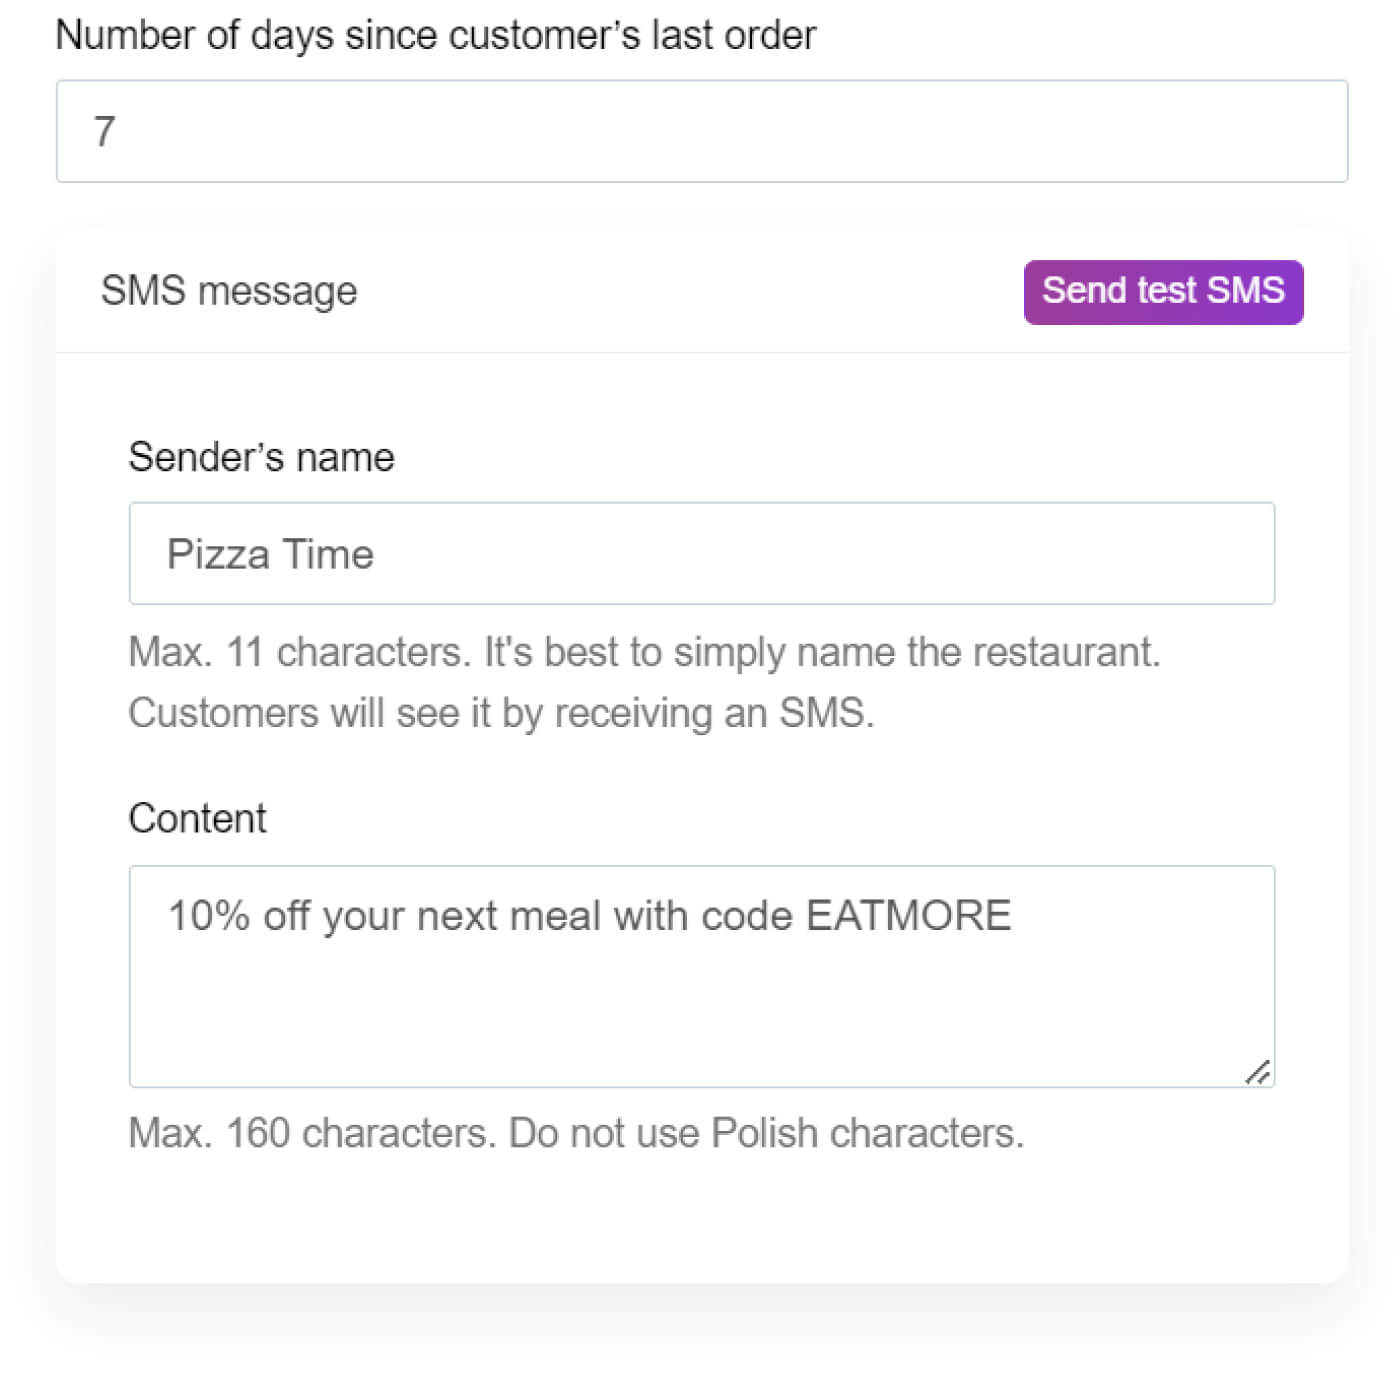 Restaurant SMS marketing - Step 2: Choosing message template